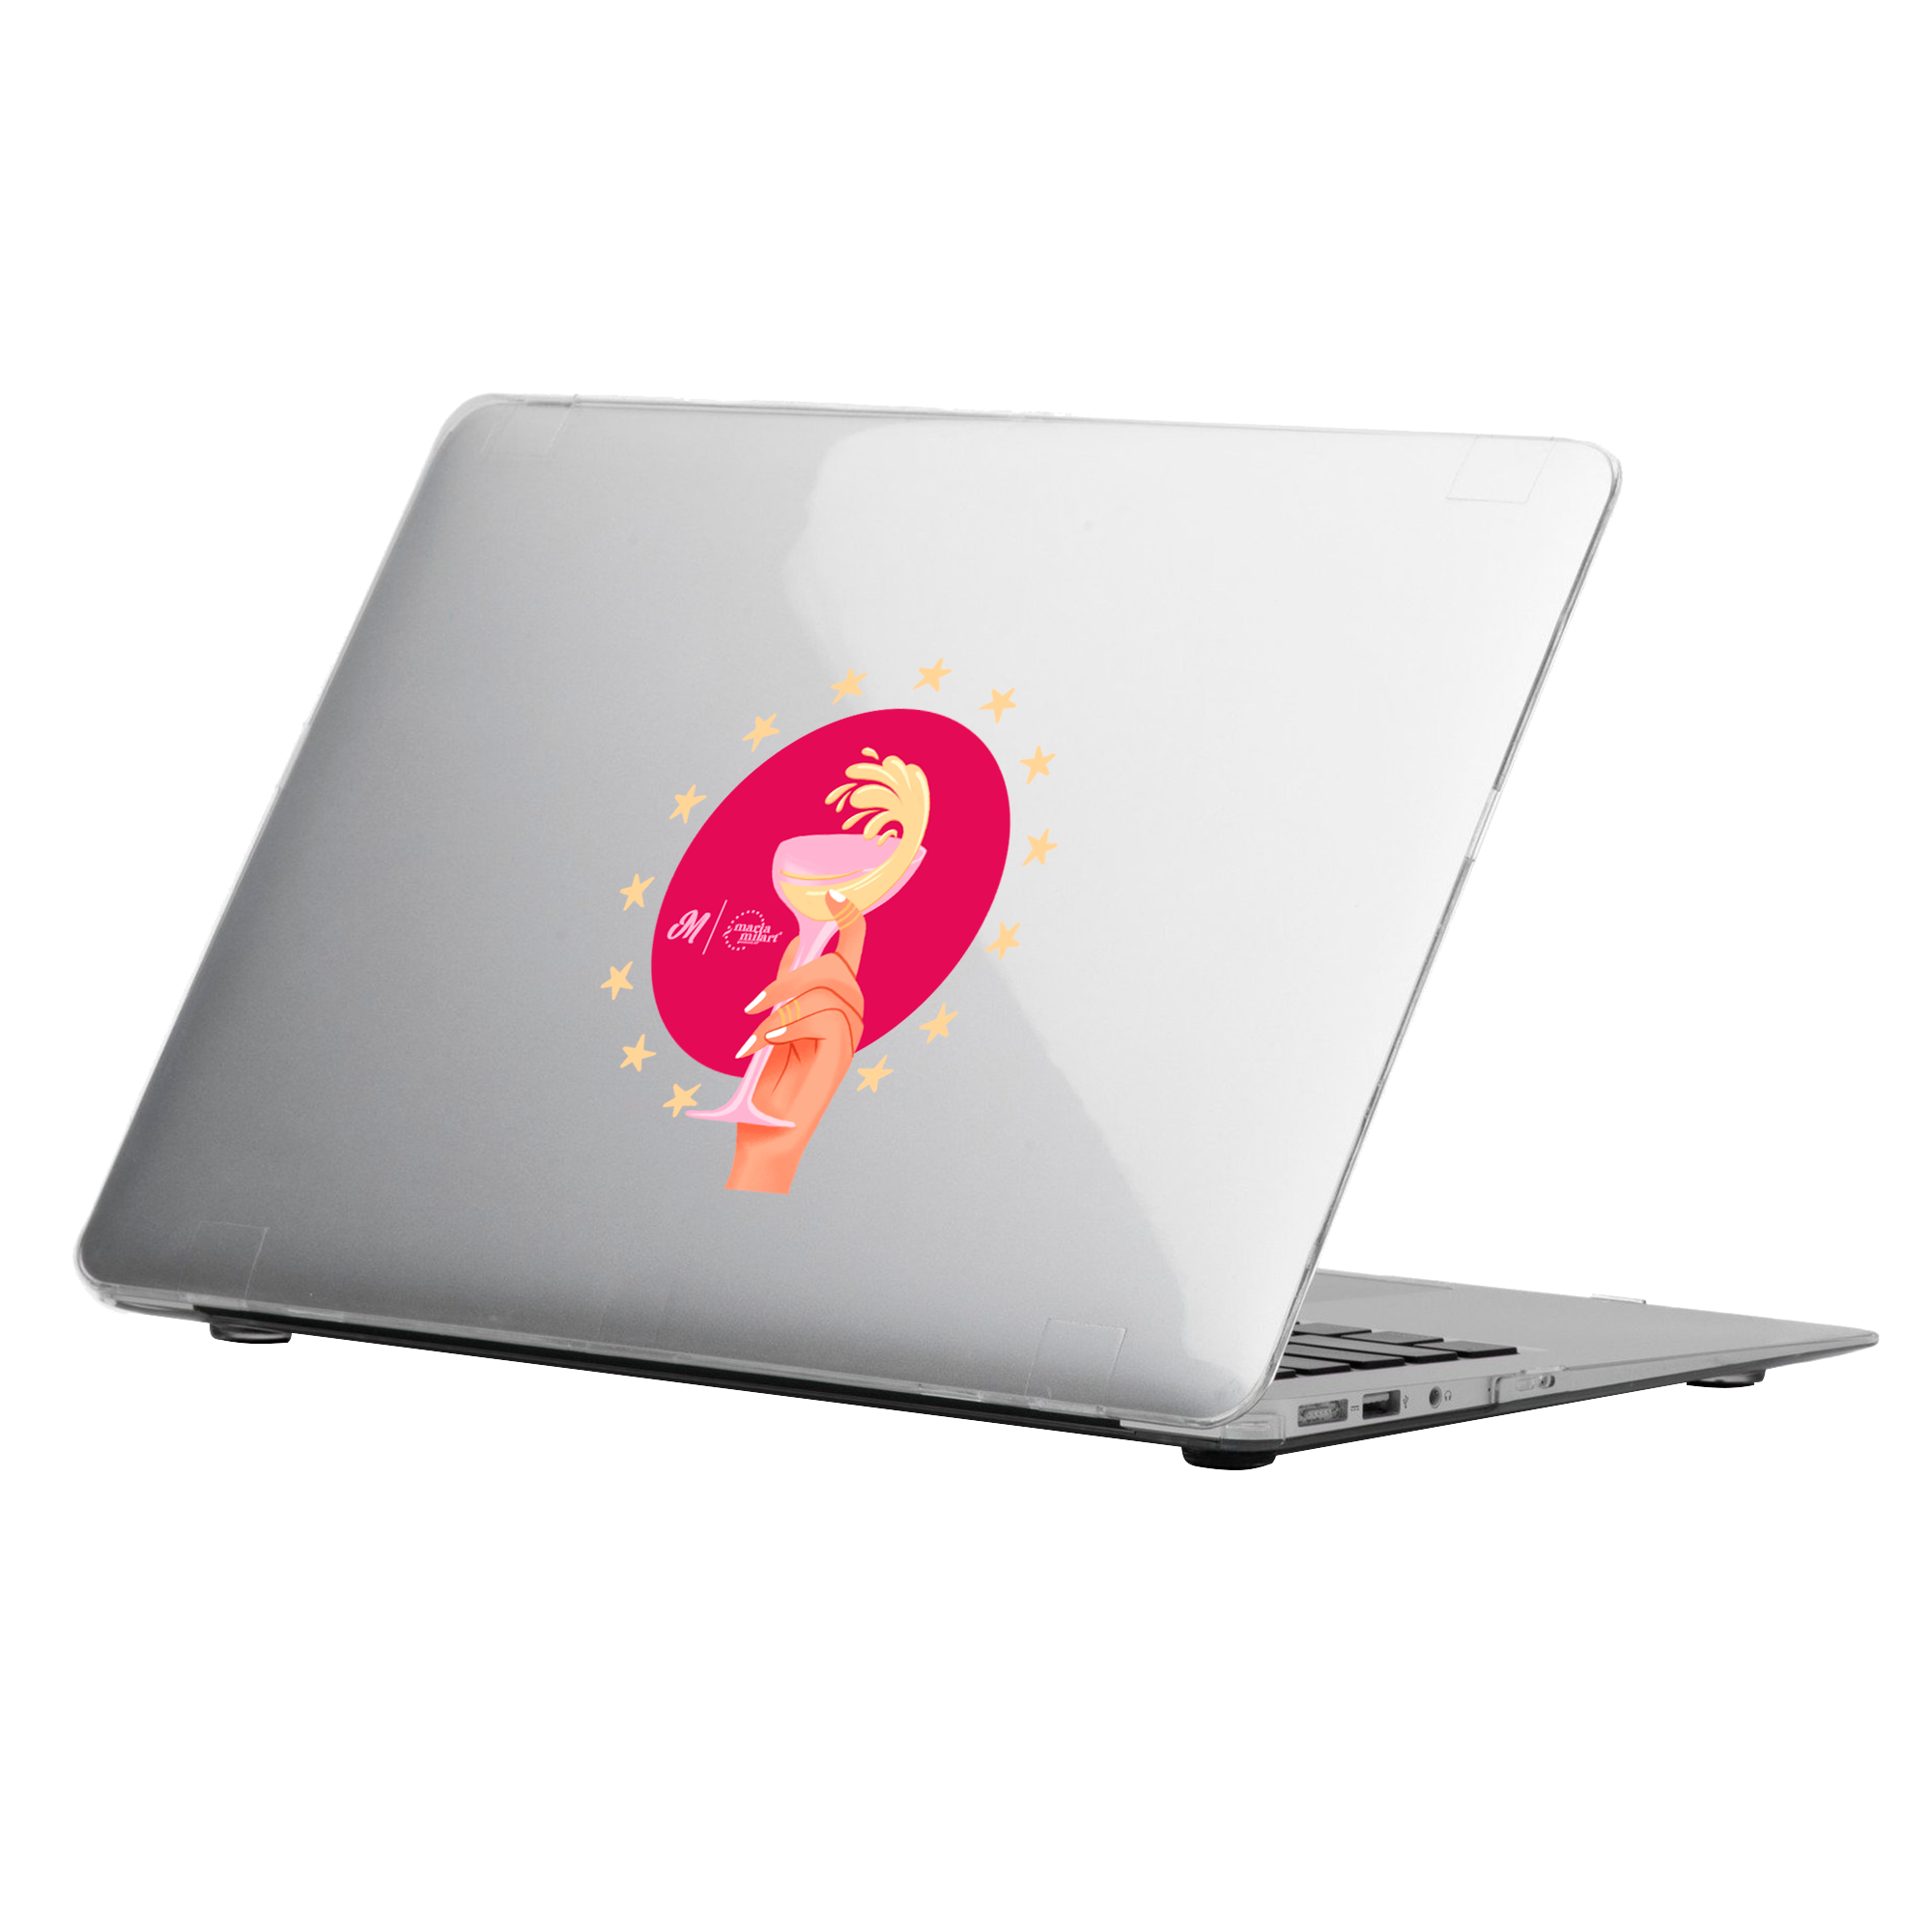 Salud MacBook Case - Mandala Cases